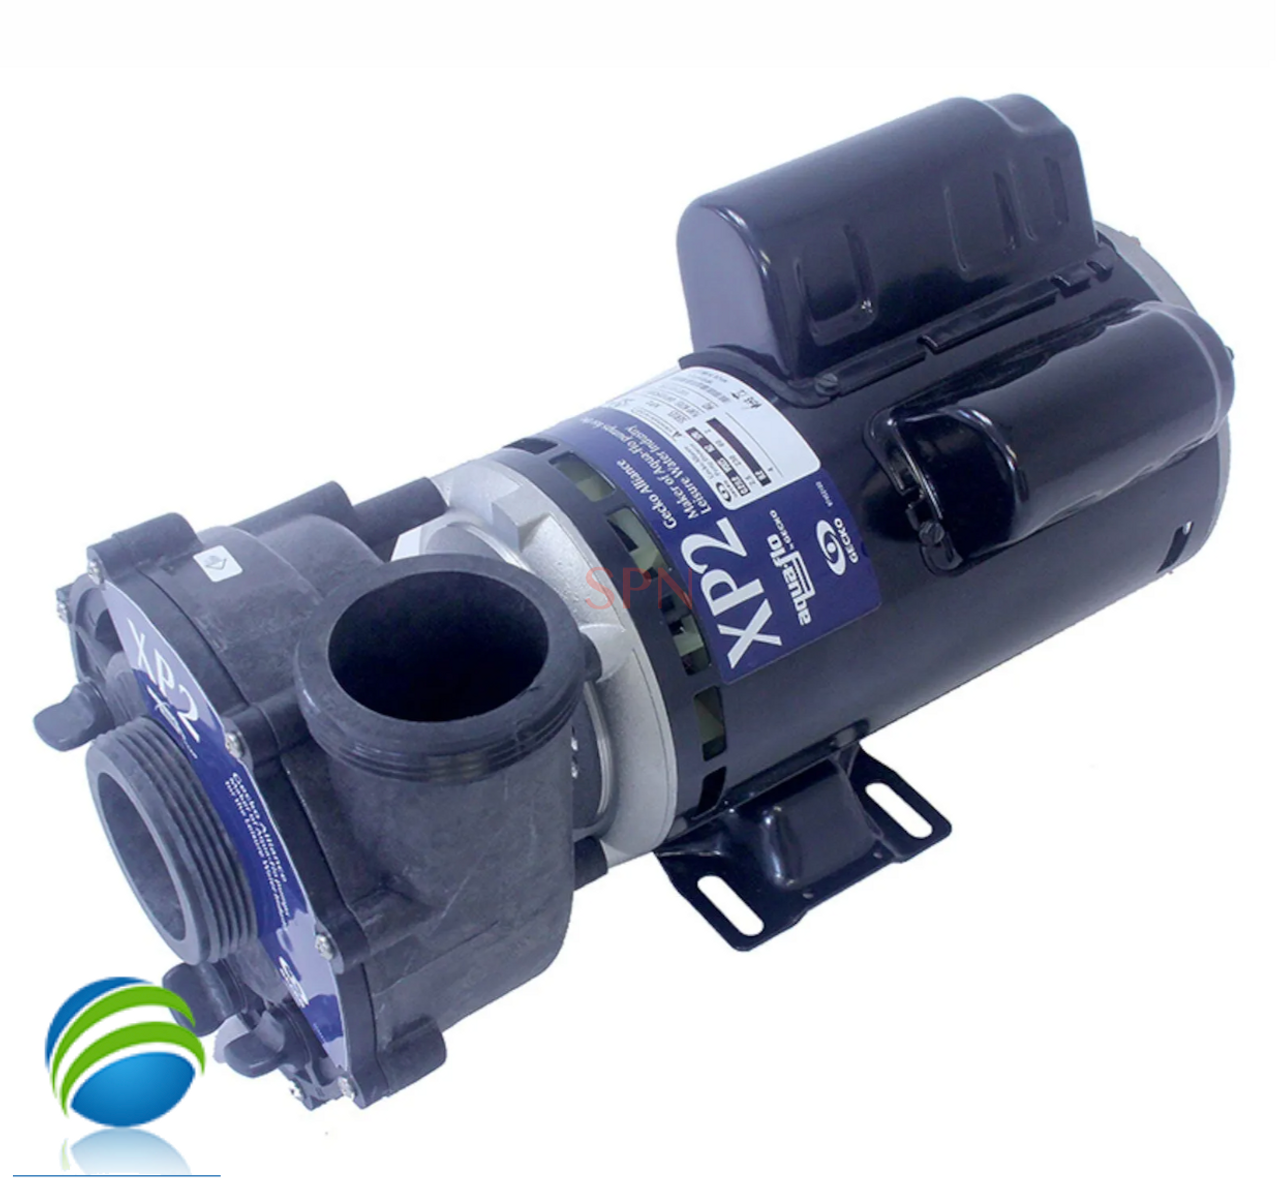 Complete Pump, Aqua-Flo XP2, 1.0HP, 115v, 10.5/3.2A, 48 frame, 2"x 2", 1 or 2 Speed